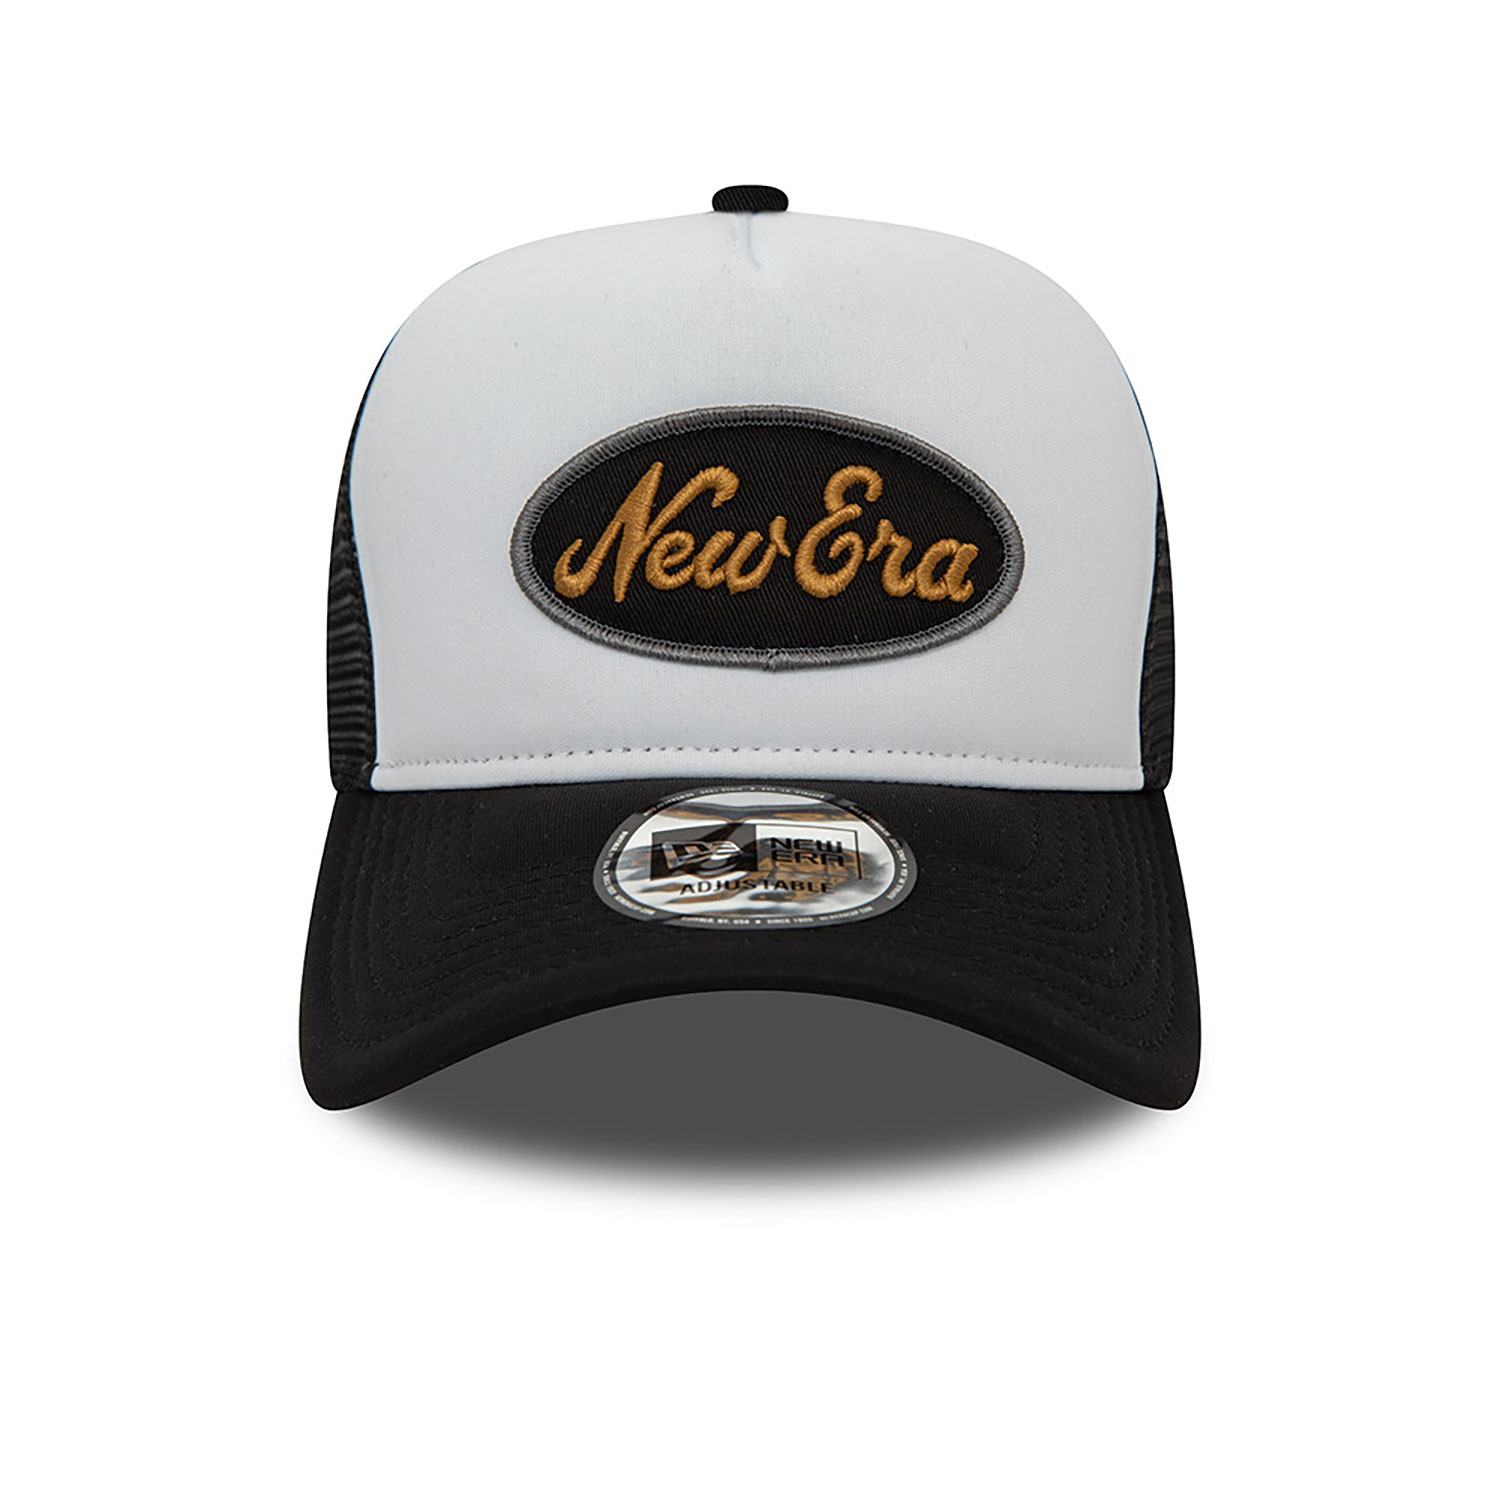 New Era Oval Black Trucker Cap